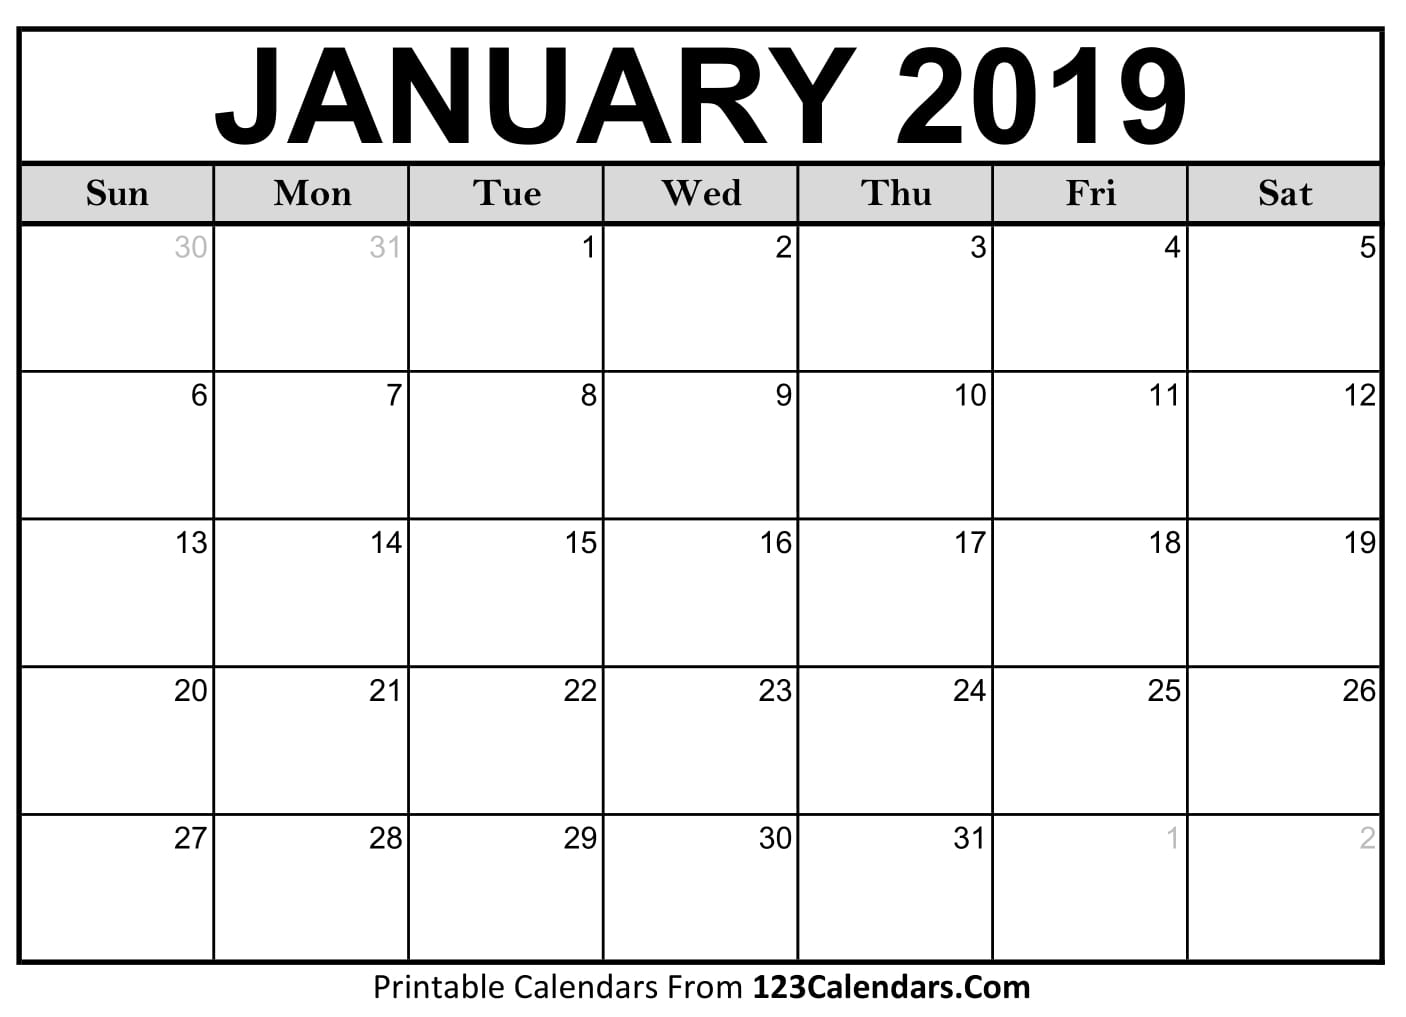 Free Printable Calendar | 123Calendars